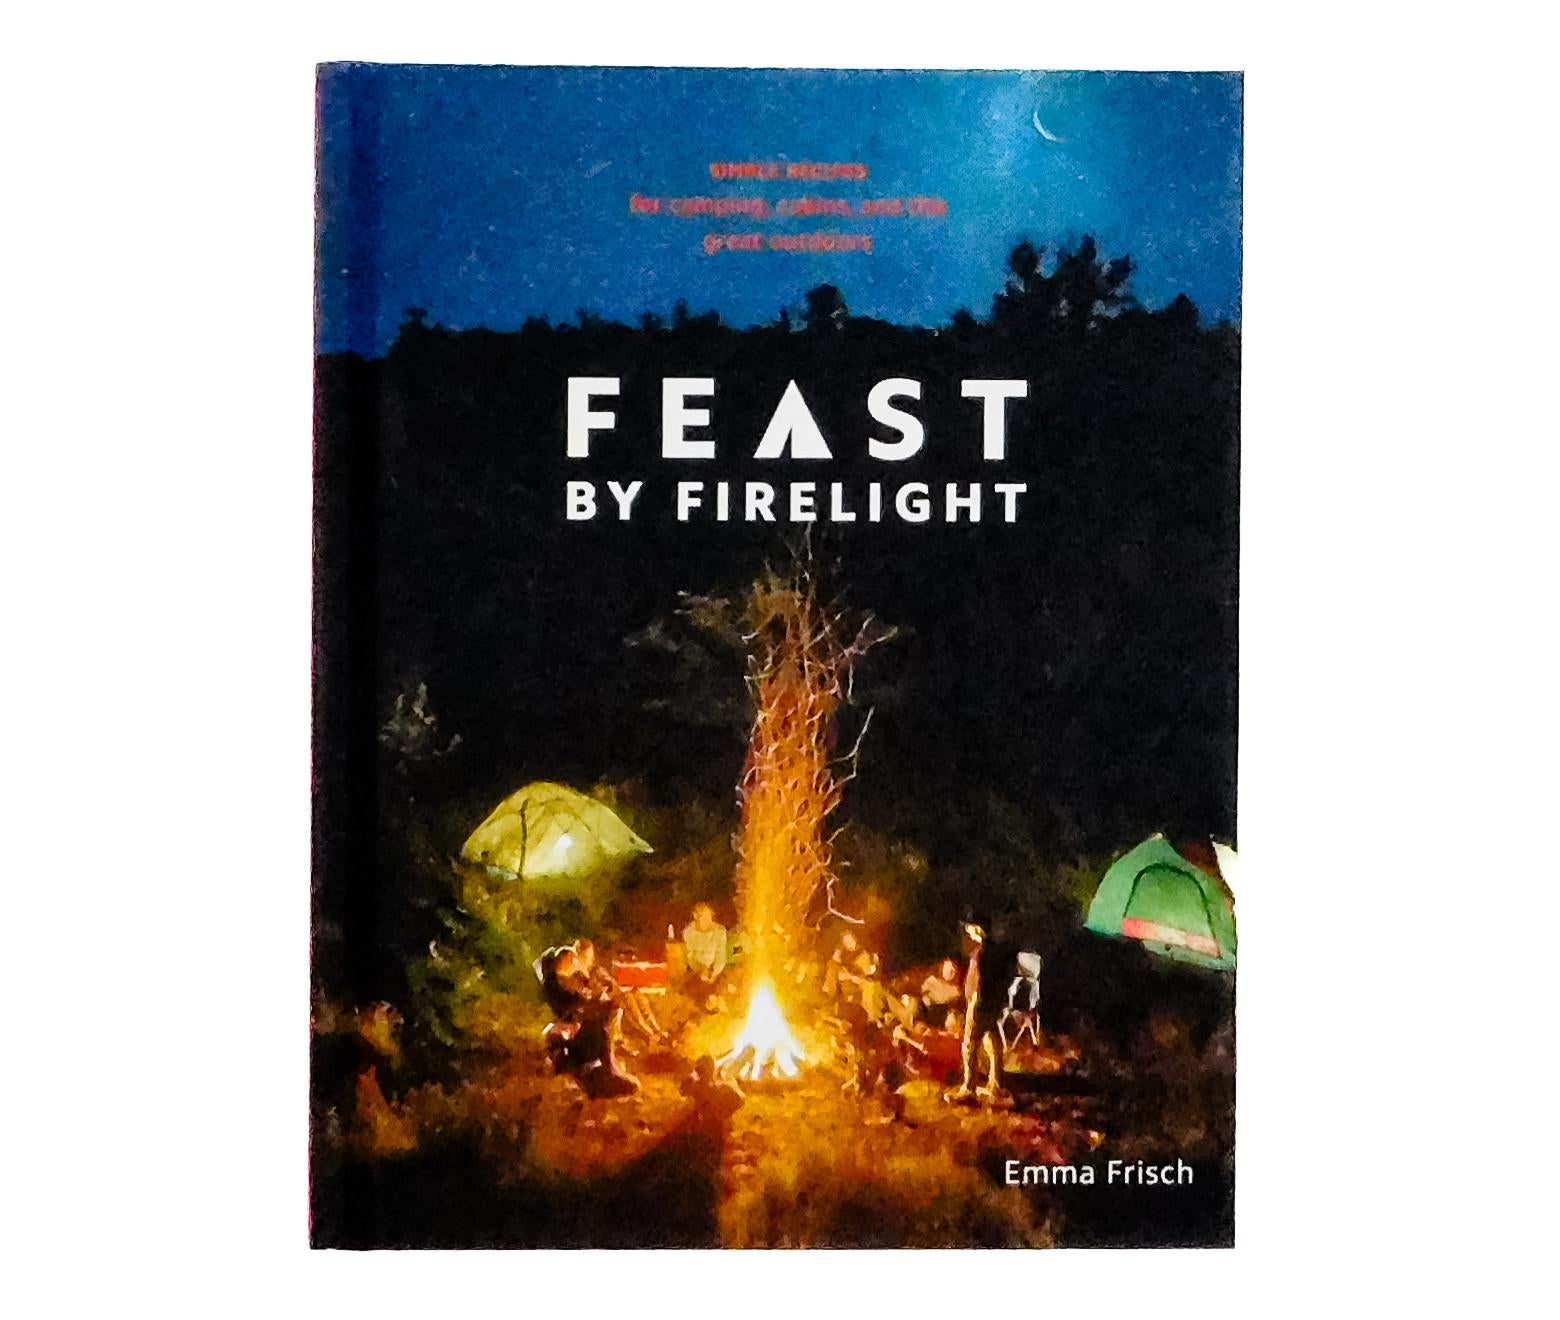 Feast by firelight book